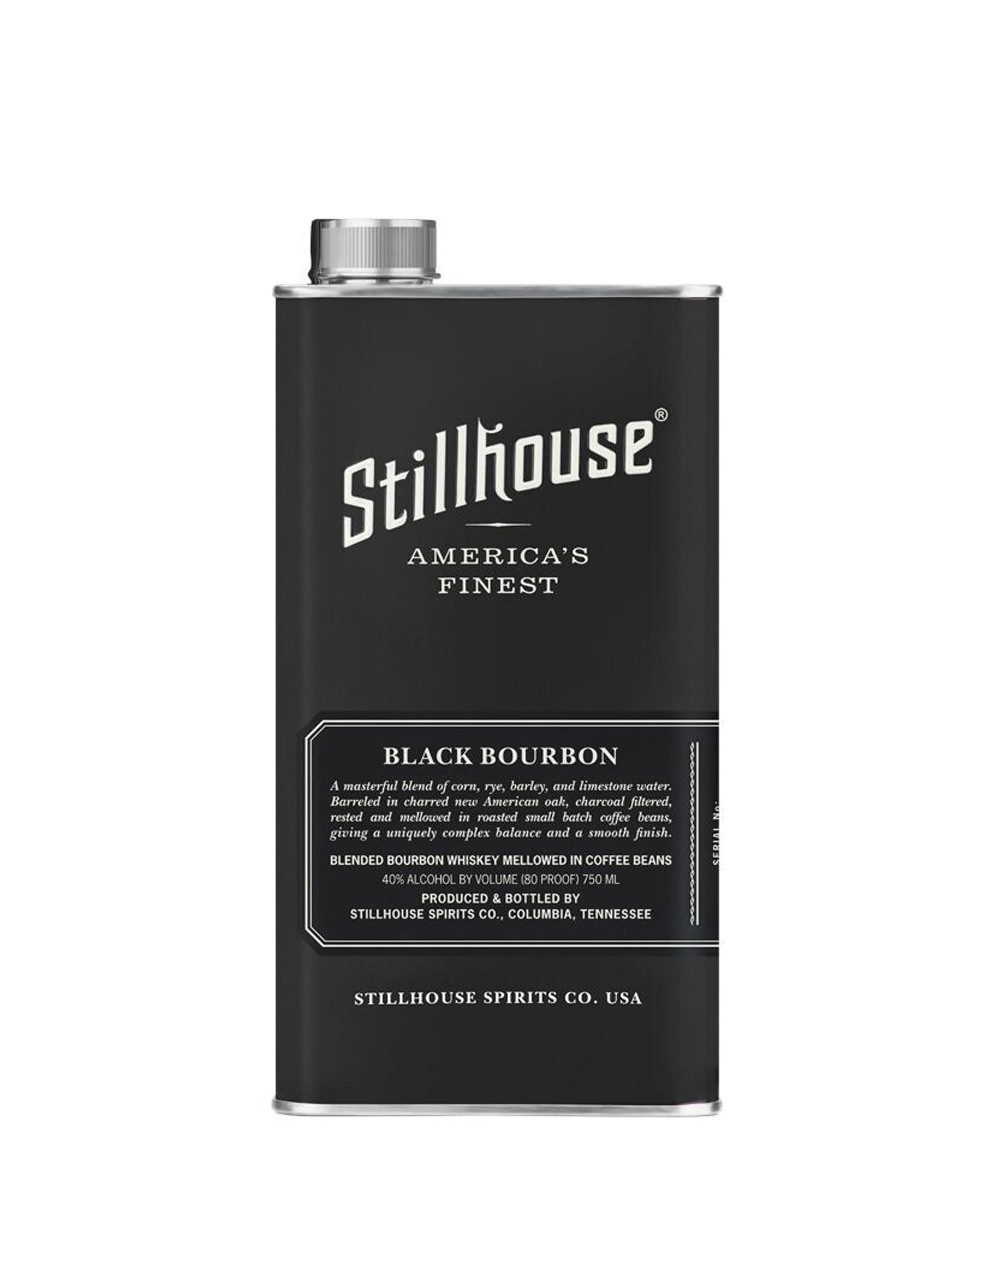 Stillhouse Black Bourbon | Buy Online or Send as a Gift